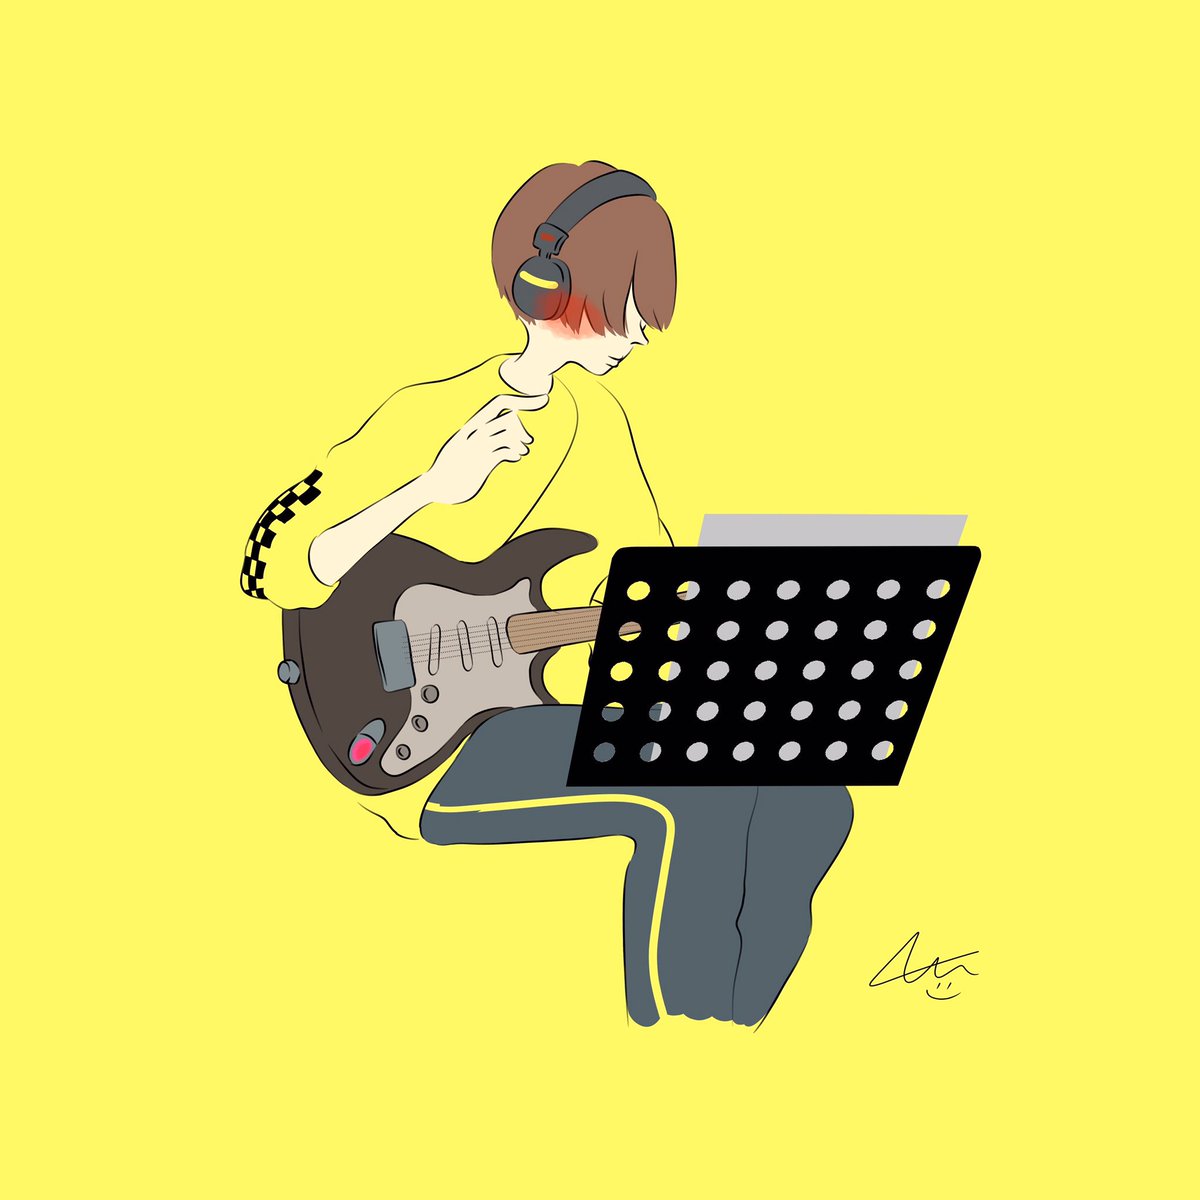 solo instrument guitar headphones yellow shirt brown hair signature  illustration images